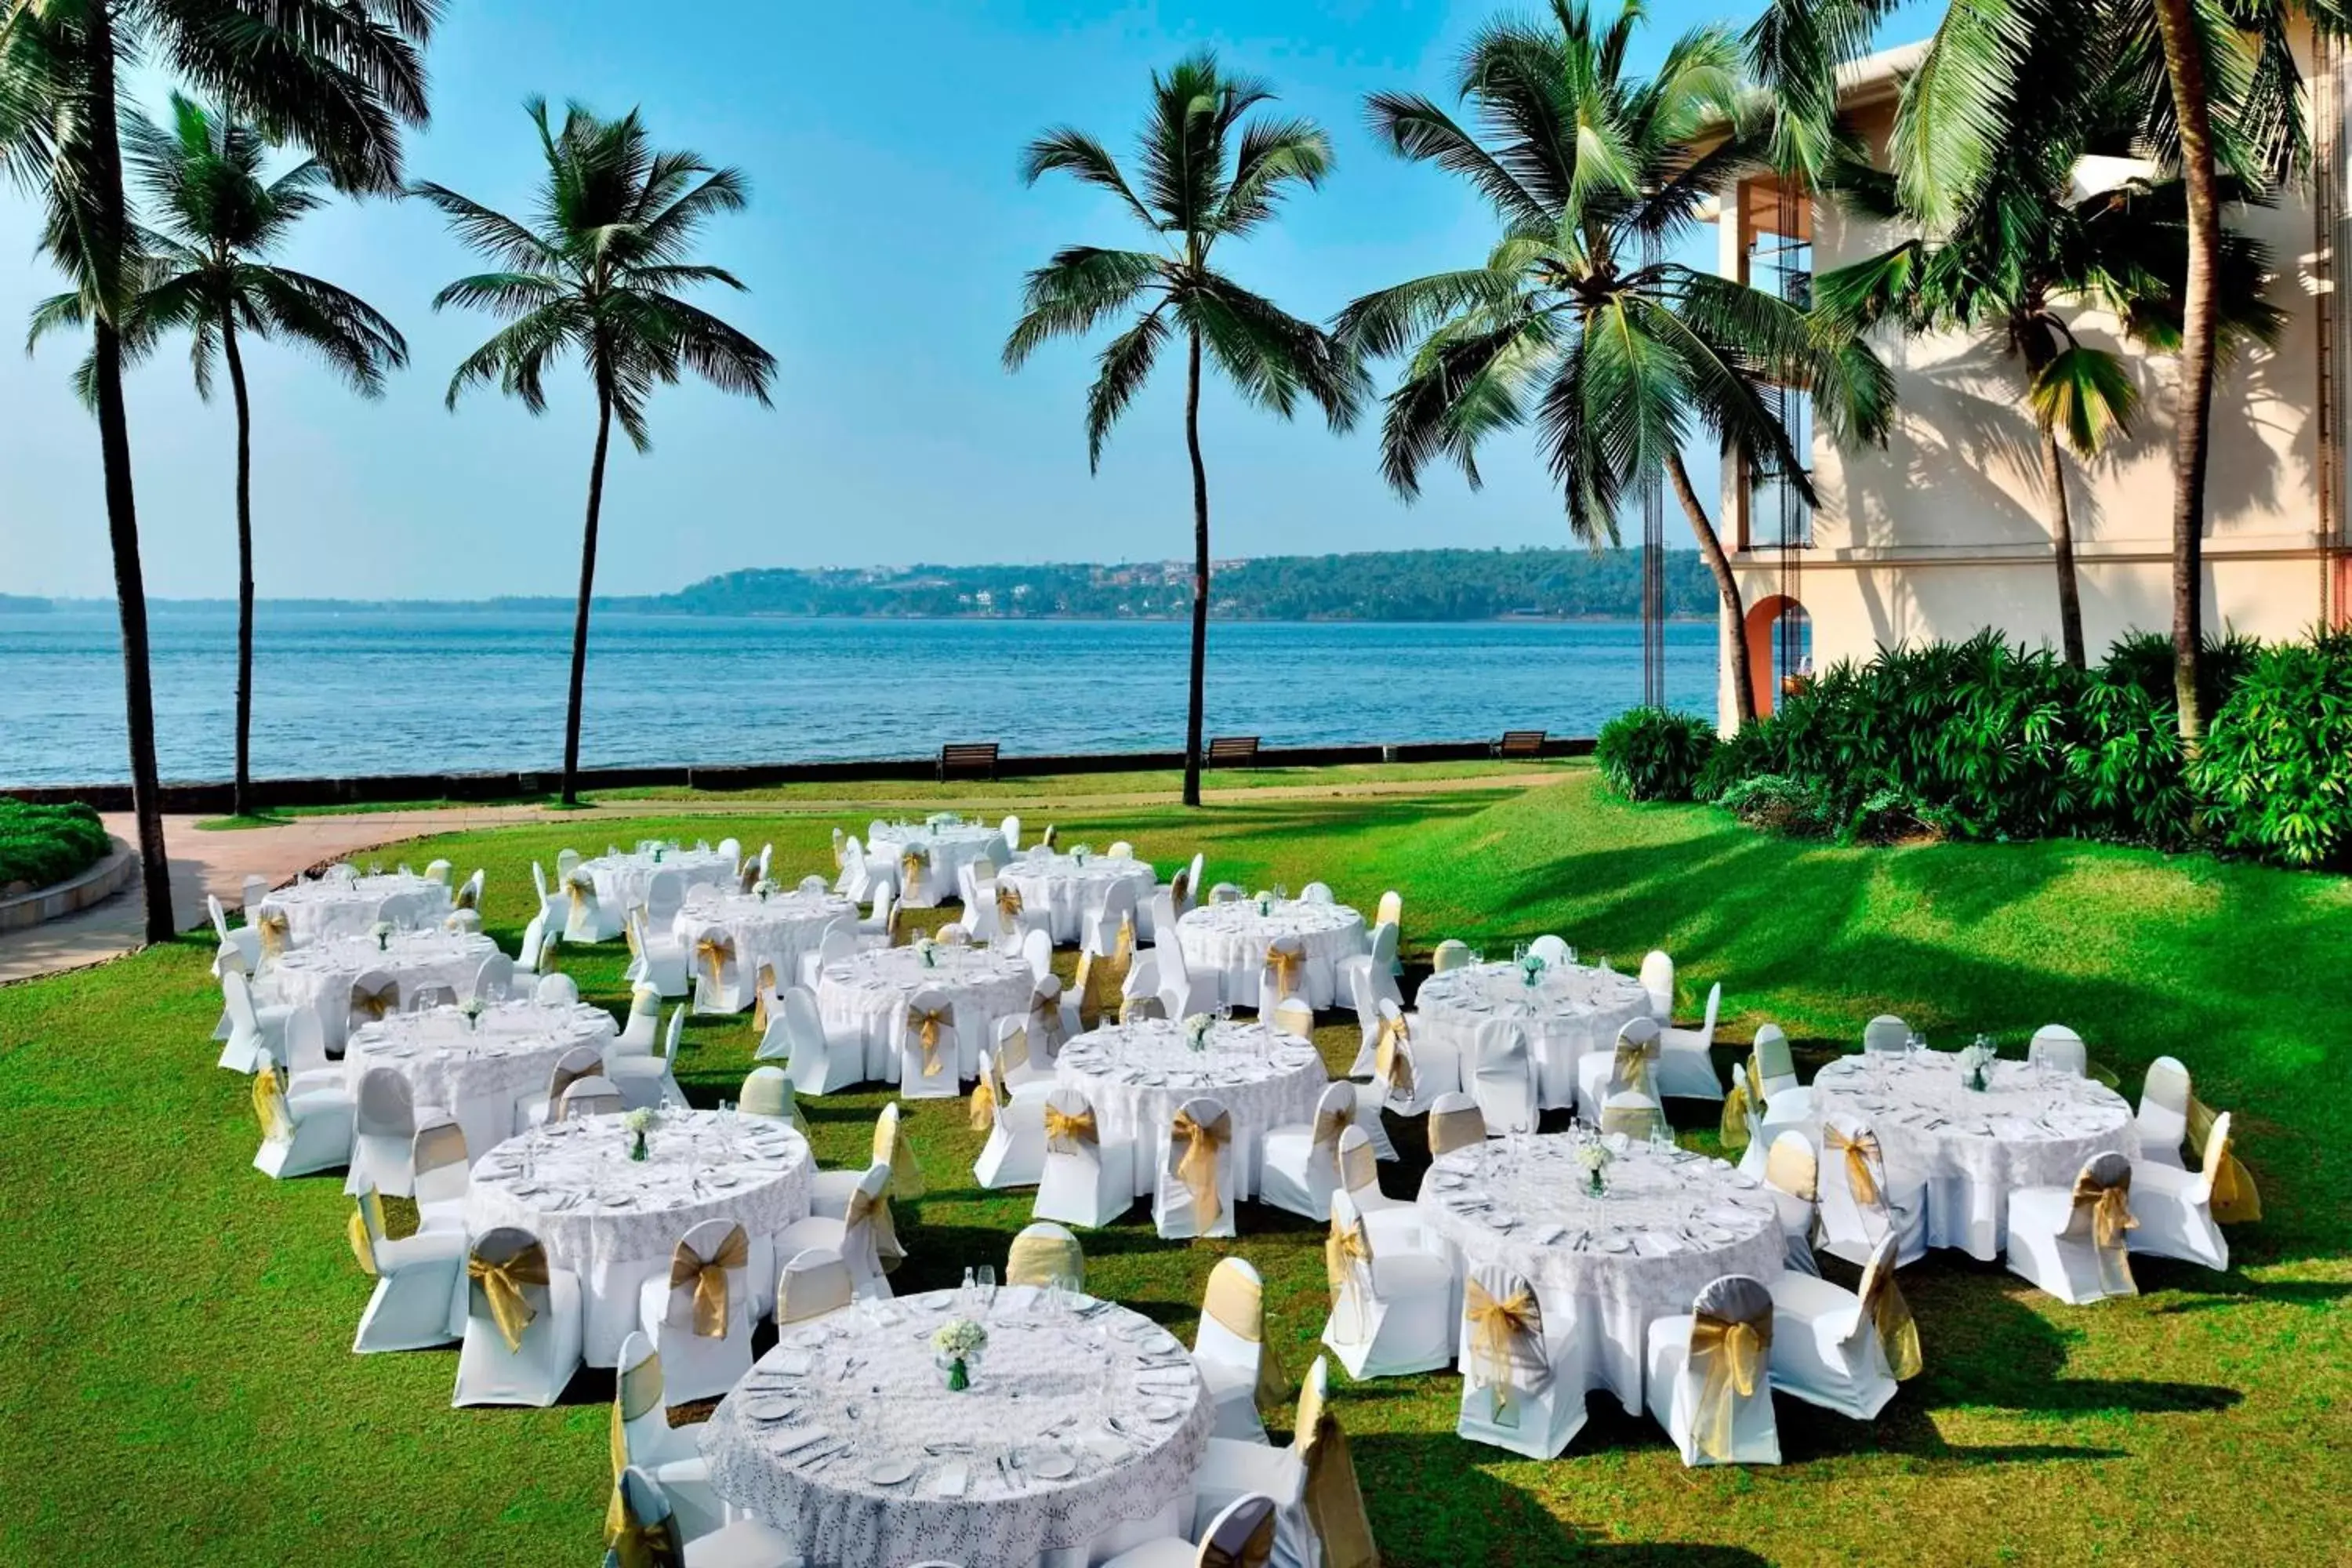 Banquet/Function facilities, Banquet Facilities in Goa Marriott Resort & Spa